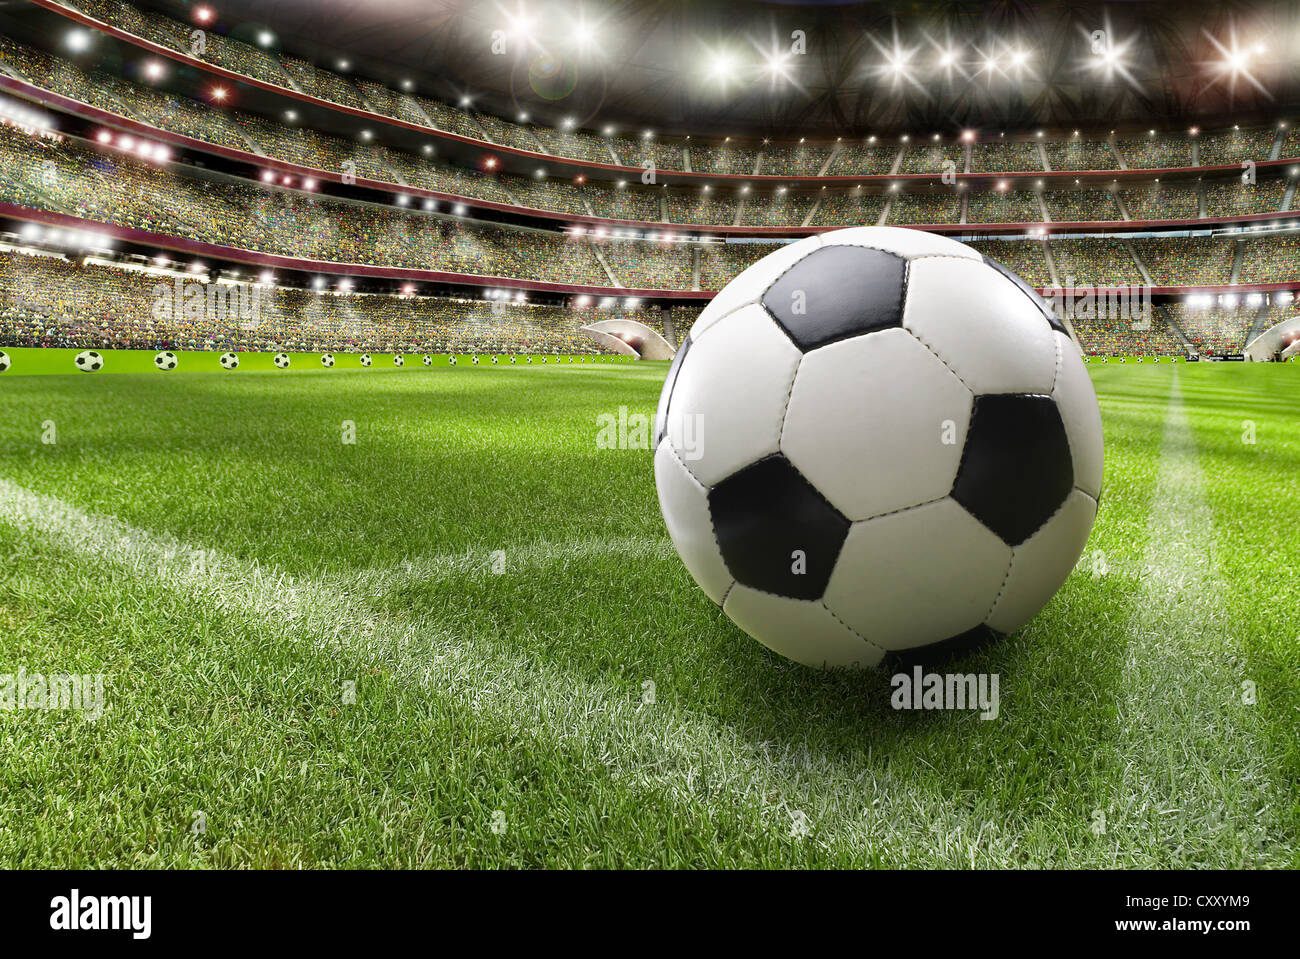 Soccer ball, soccer stadium, lawn, grand stand Stock Photo